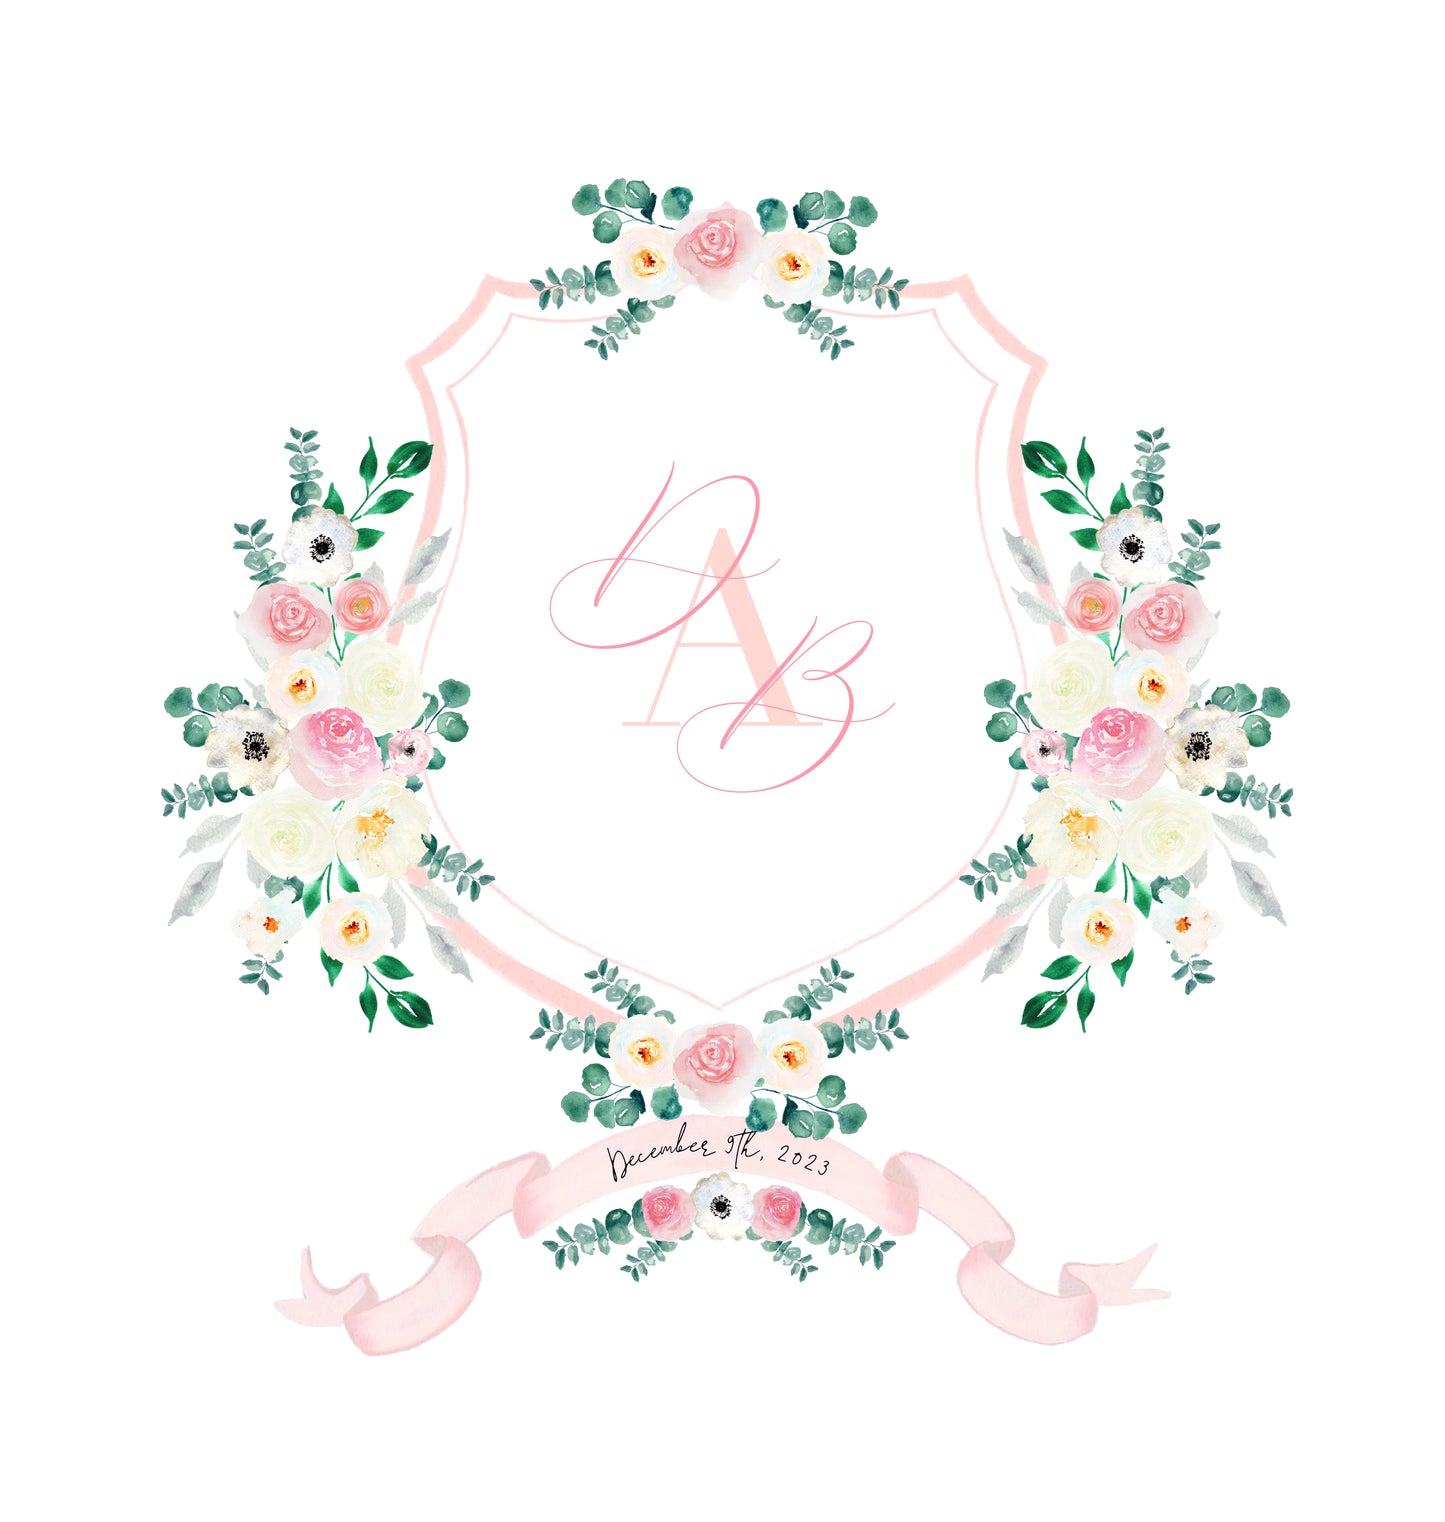 White and pink wedding crest, pink wedding crest, monogram crest, watercolor crest,blush floral crest - The Wedding Crest Lab